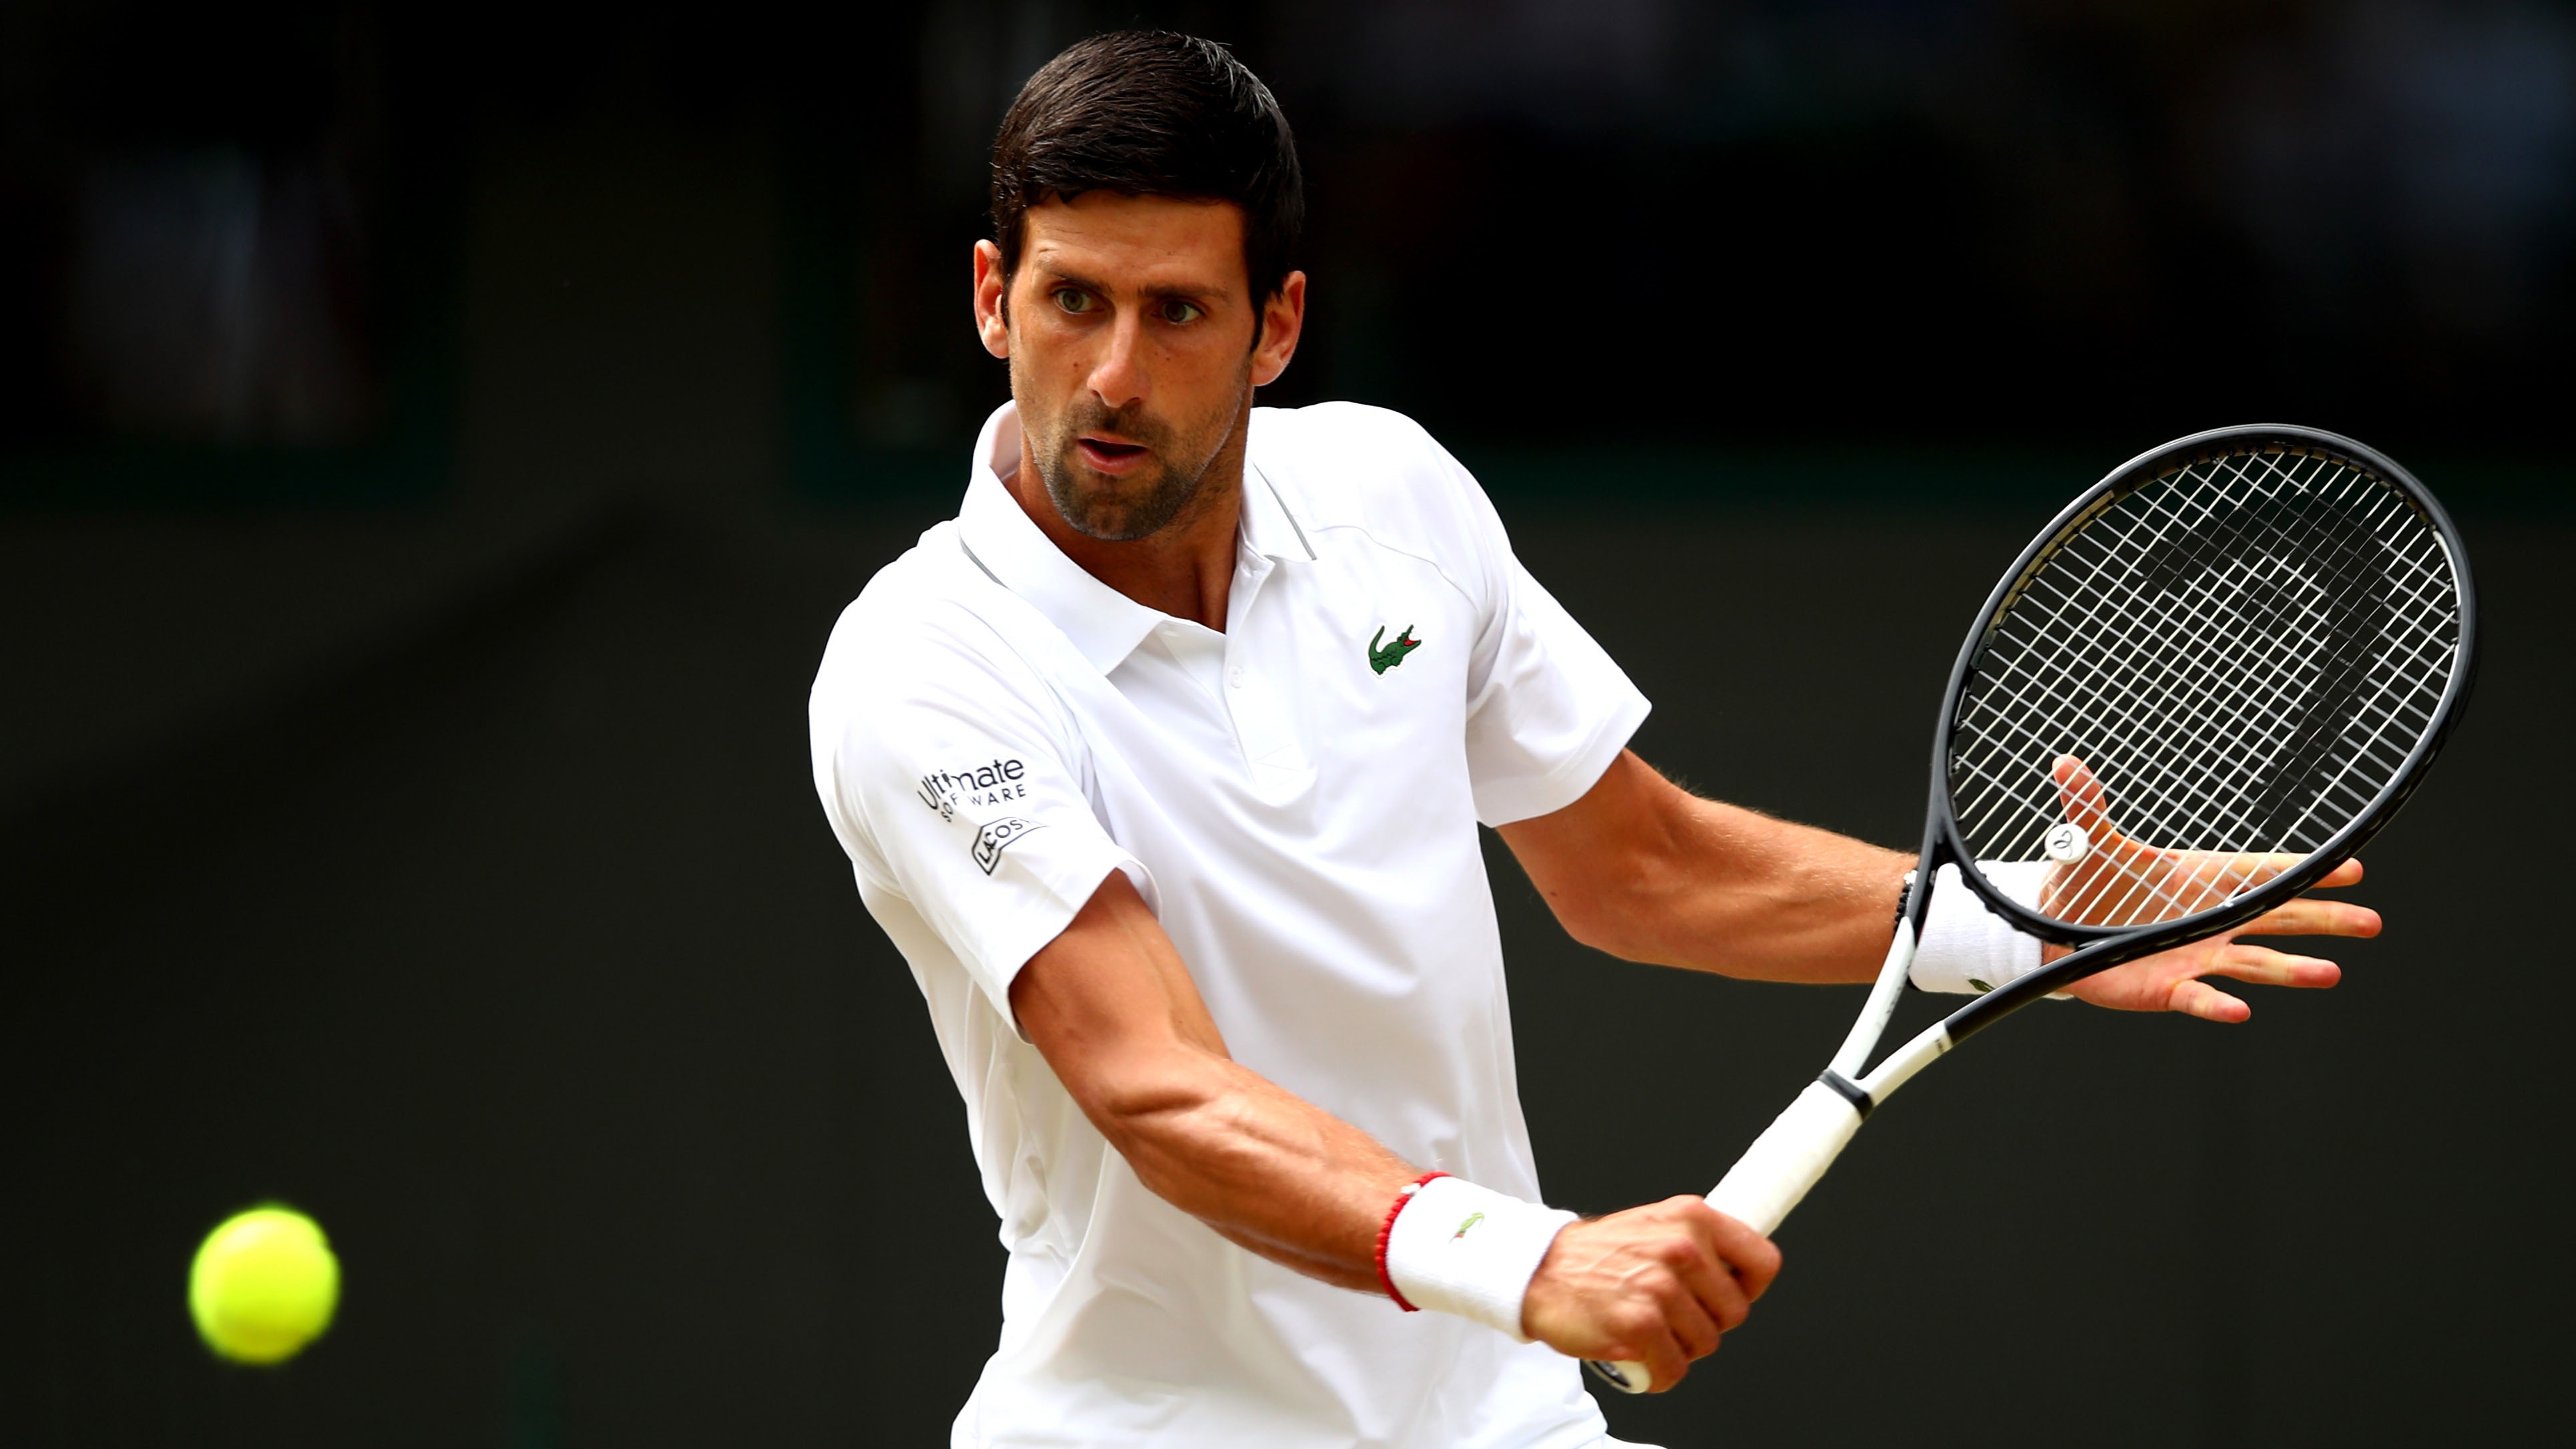 How tall is Novak Djokovic?